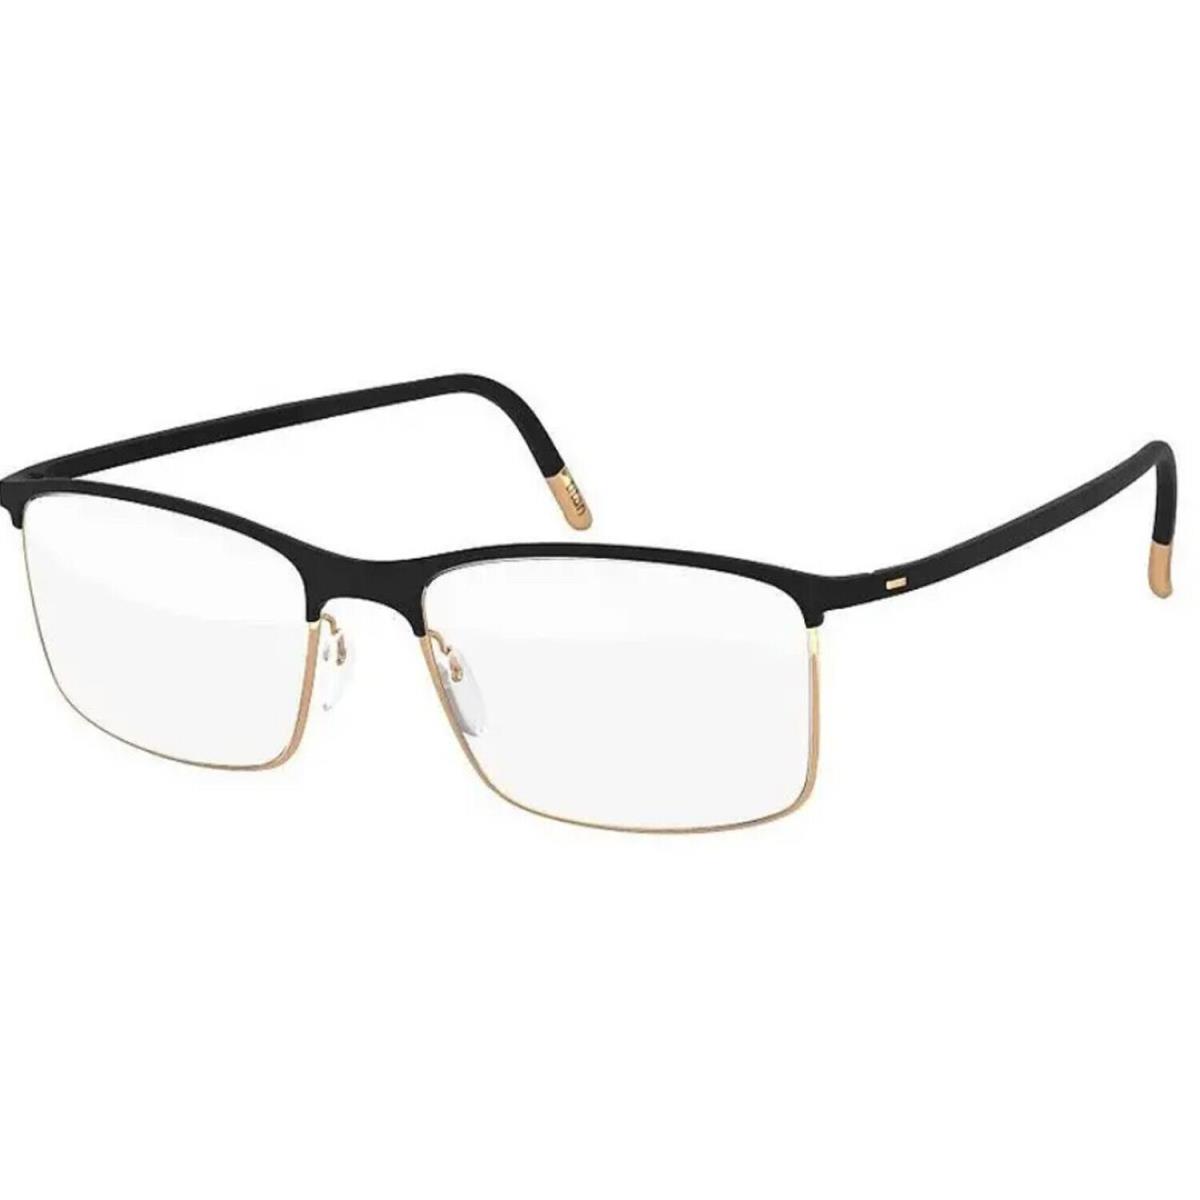 Silhouette Eyeglasses Urban Fusion 54-18-145 Black Gold 2904-6050-54mm